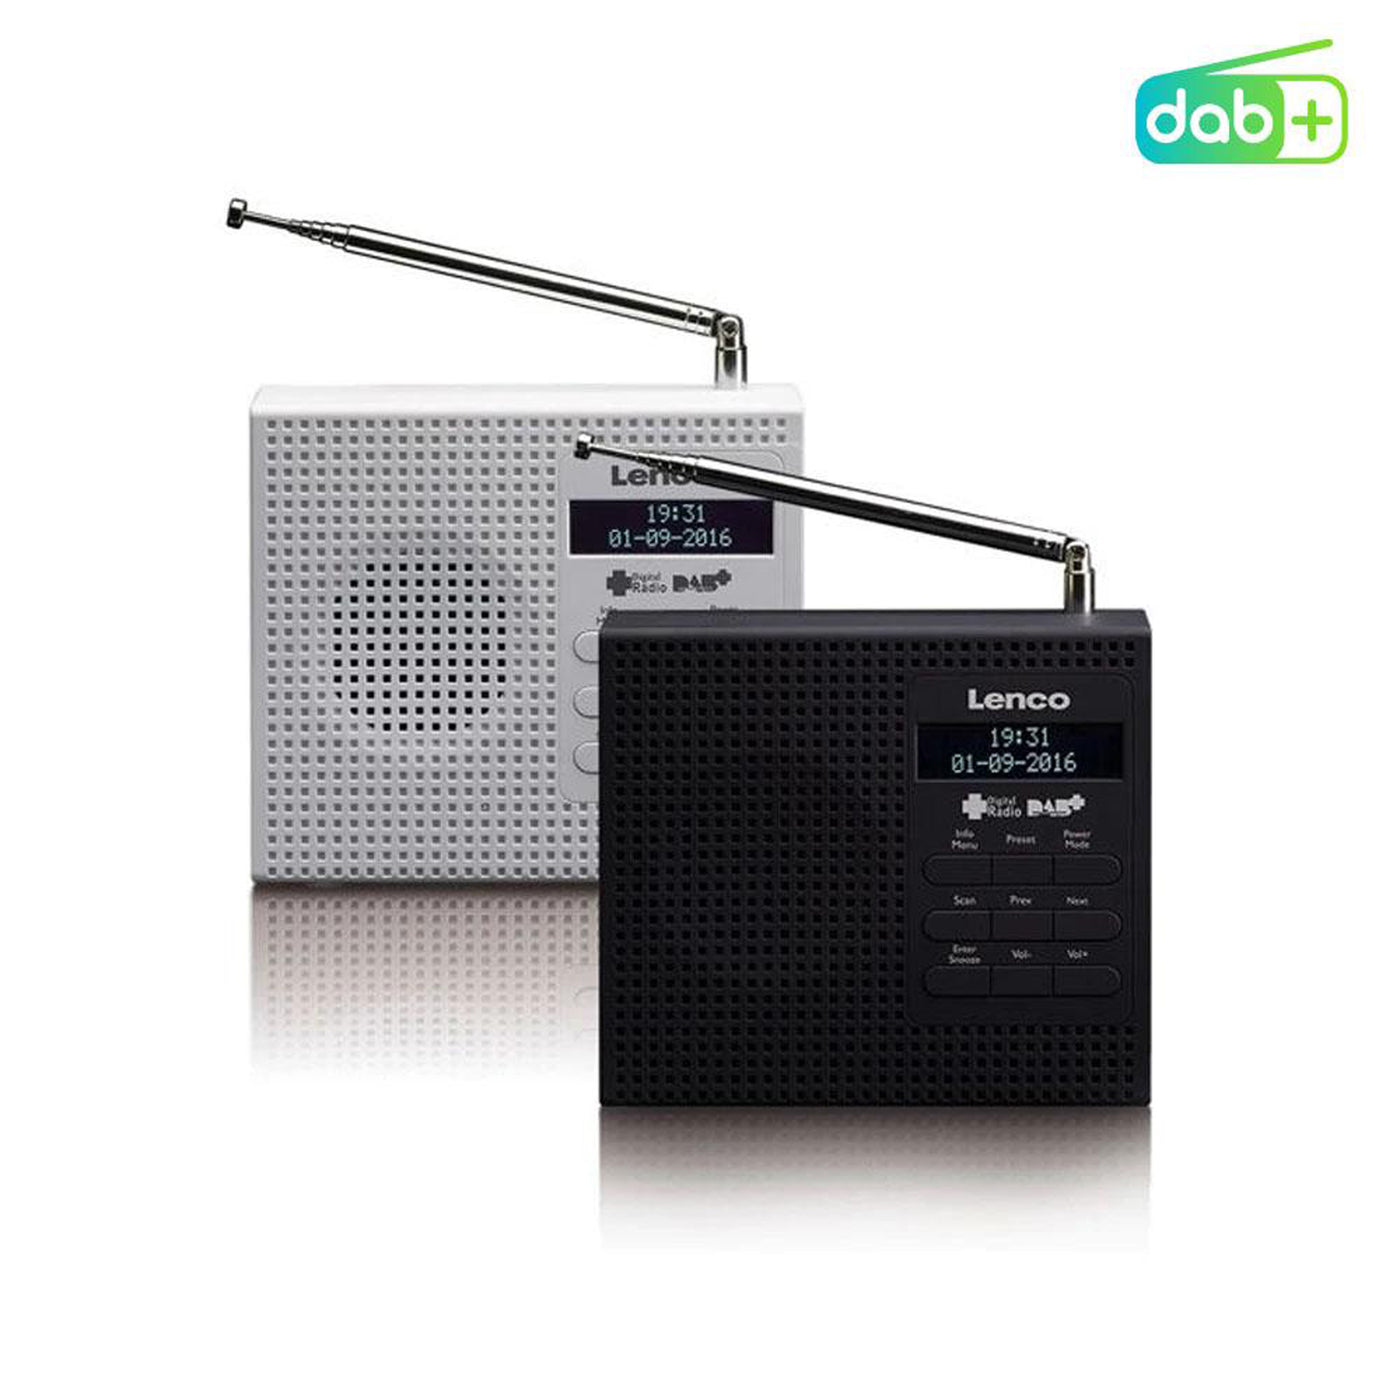 LENCO PDR-020WH - Portable radio DAB+ FM radio with alarm function - White